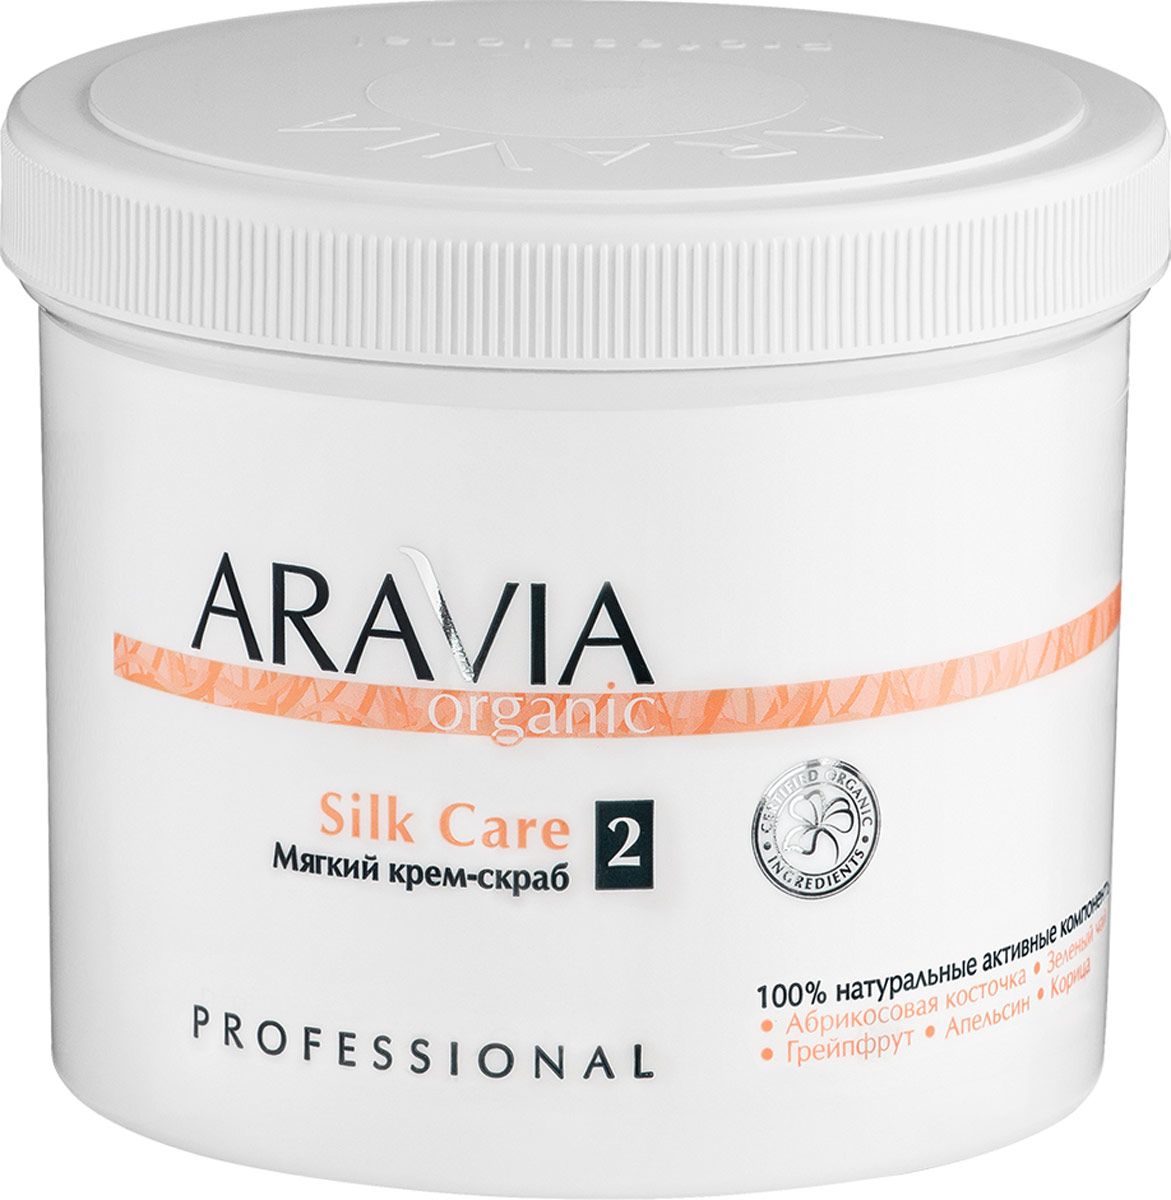 Aravia Organic  - Silk Care, 550 